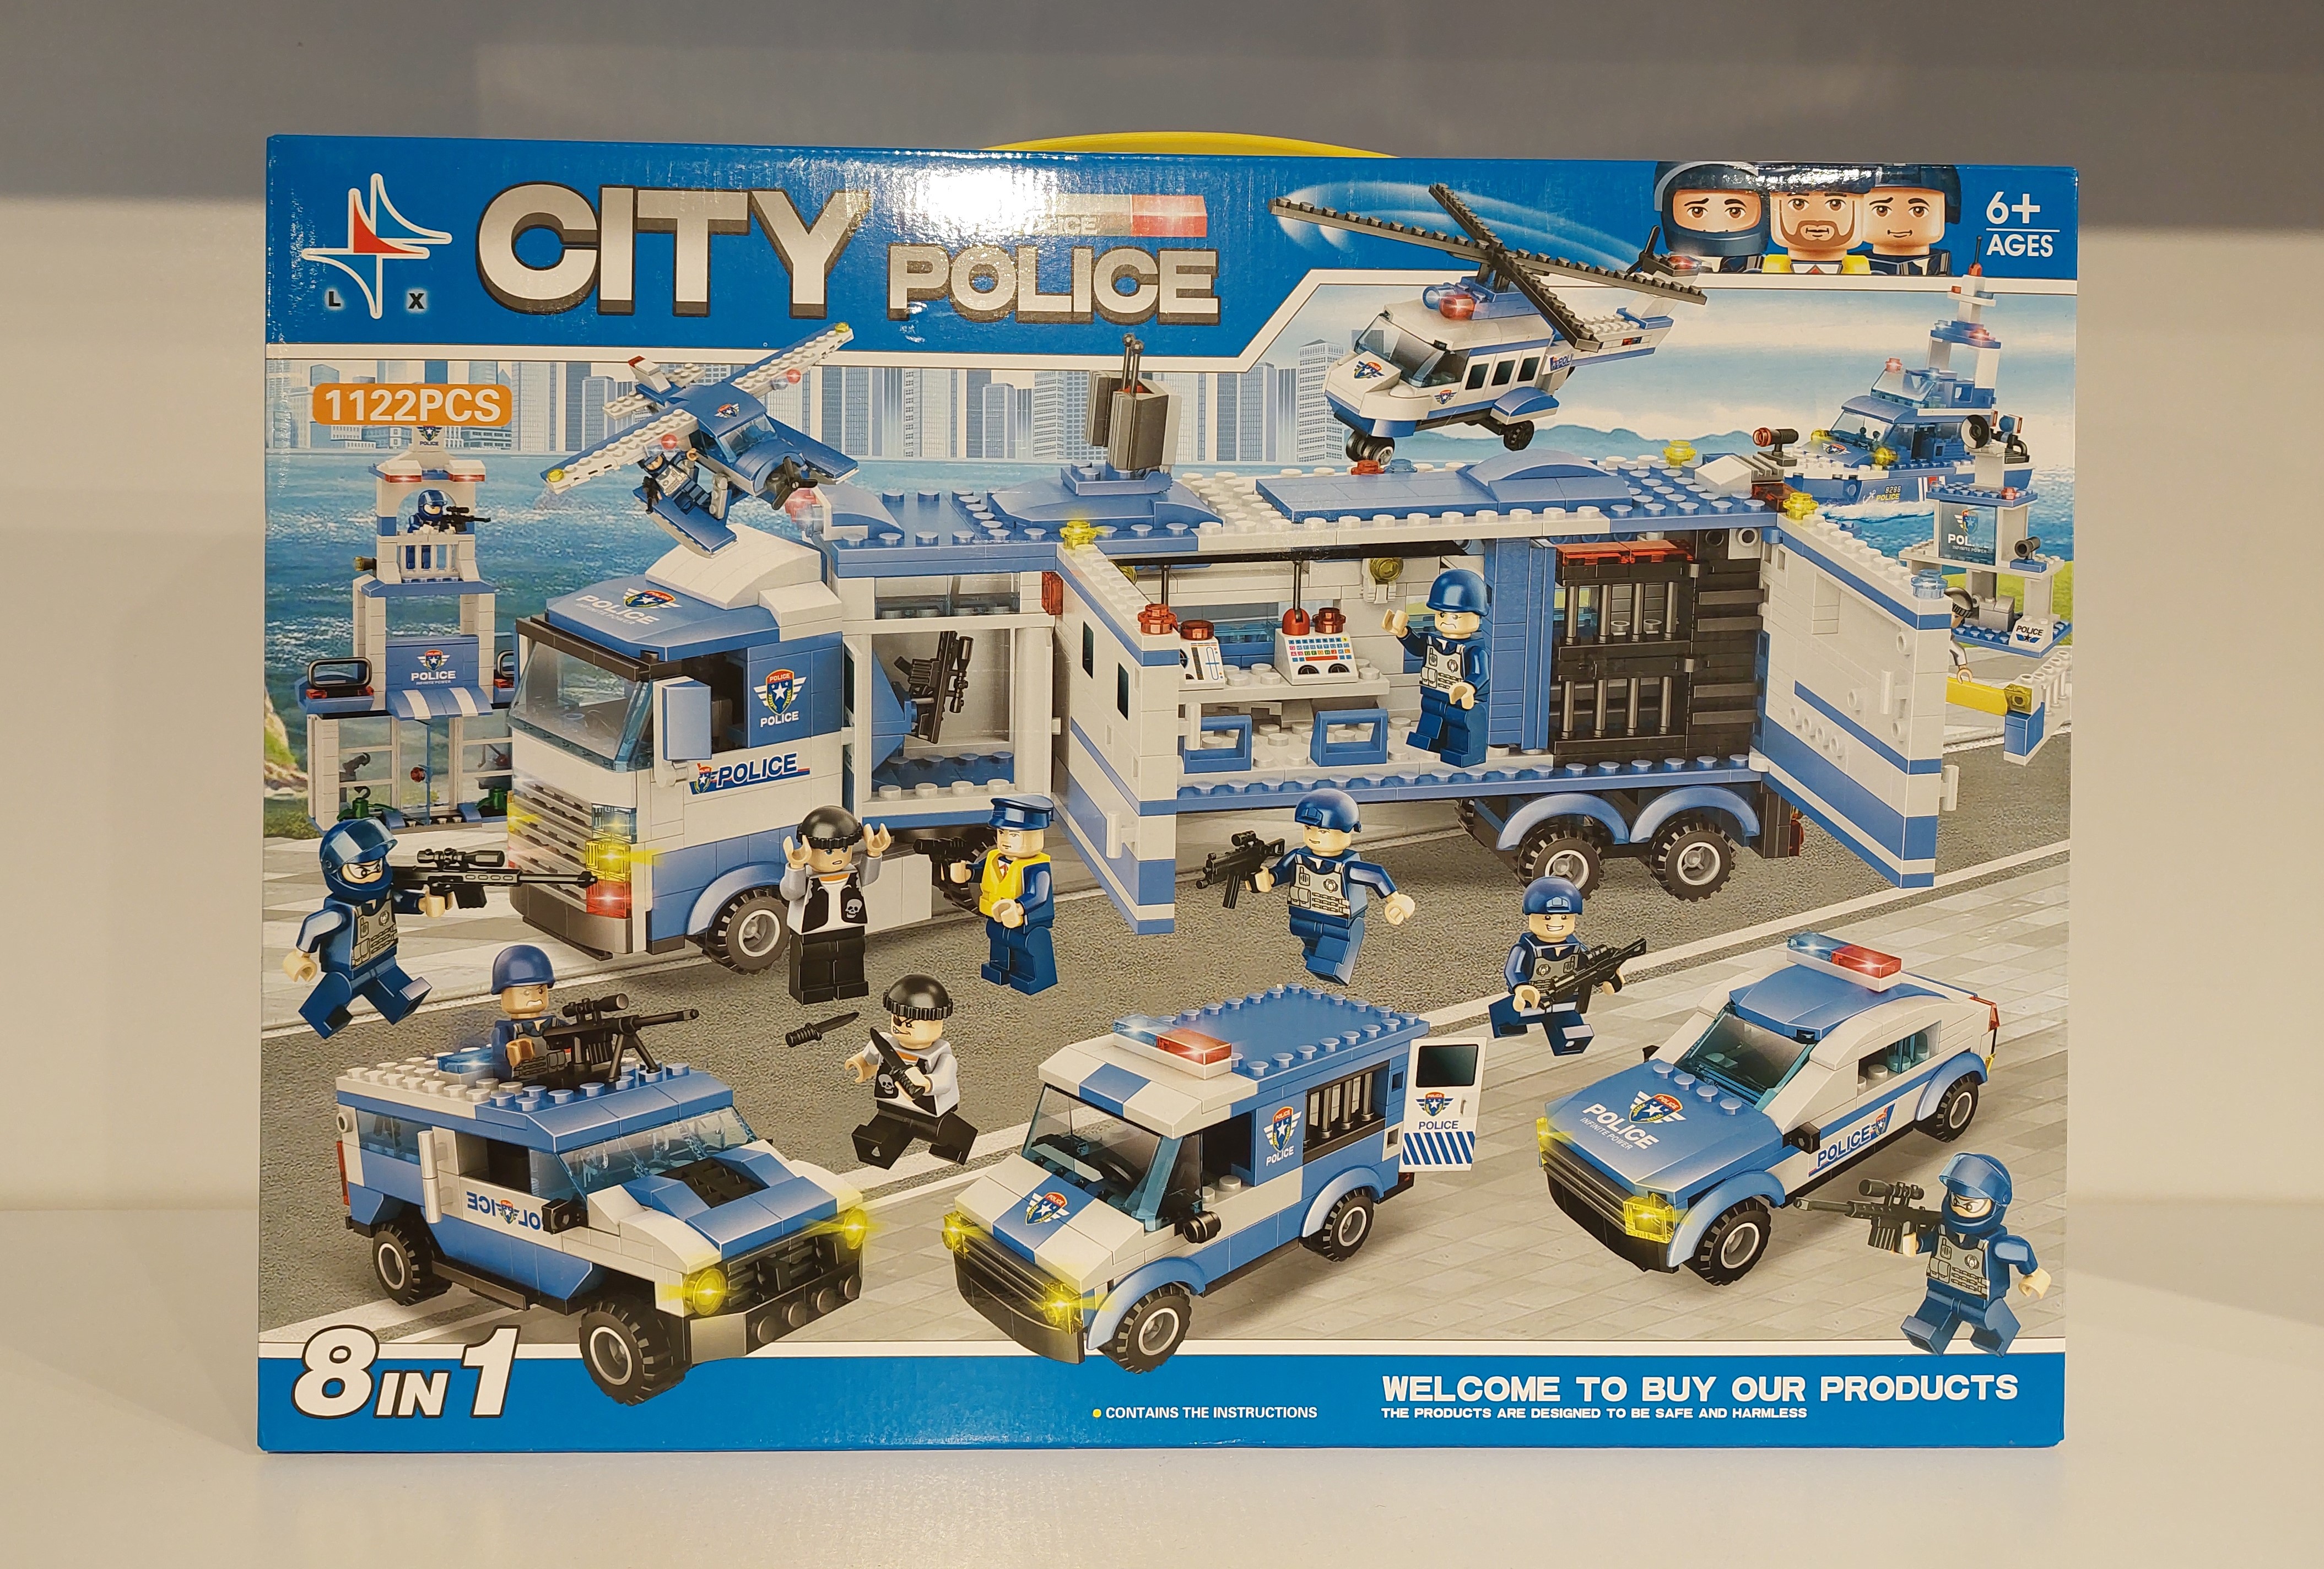 لگو-1122-قطعه-شهر-پلیس-8-در-1-کد-lx.a322